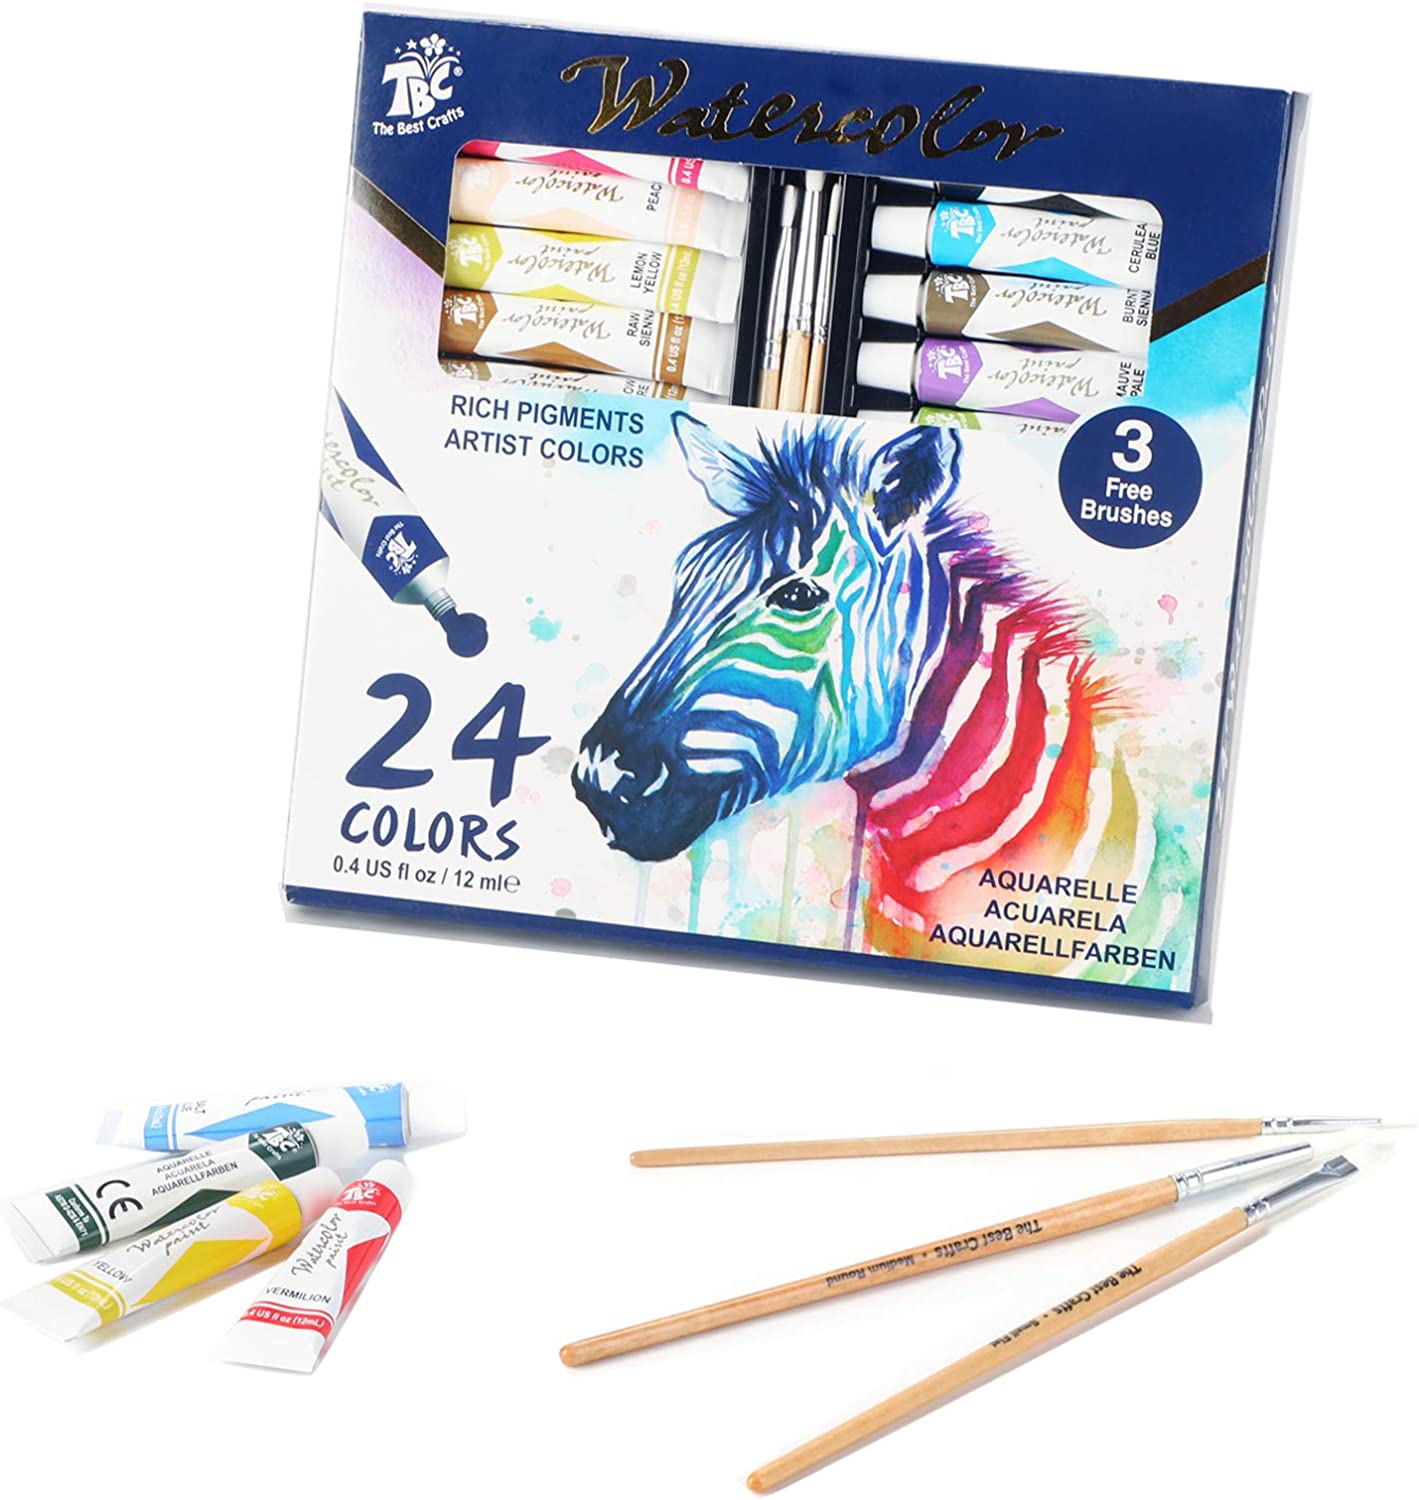 Watercolor Paint Set in Aluminum Tubes with 3 Bonus Brushes